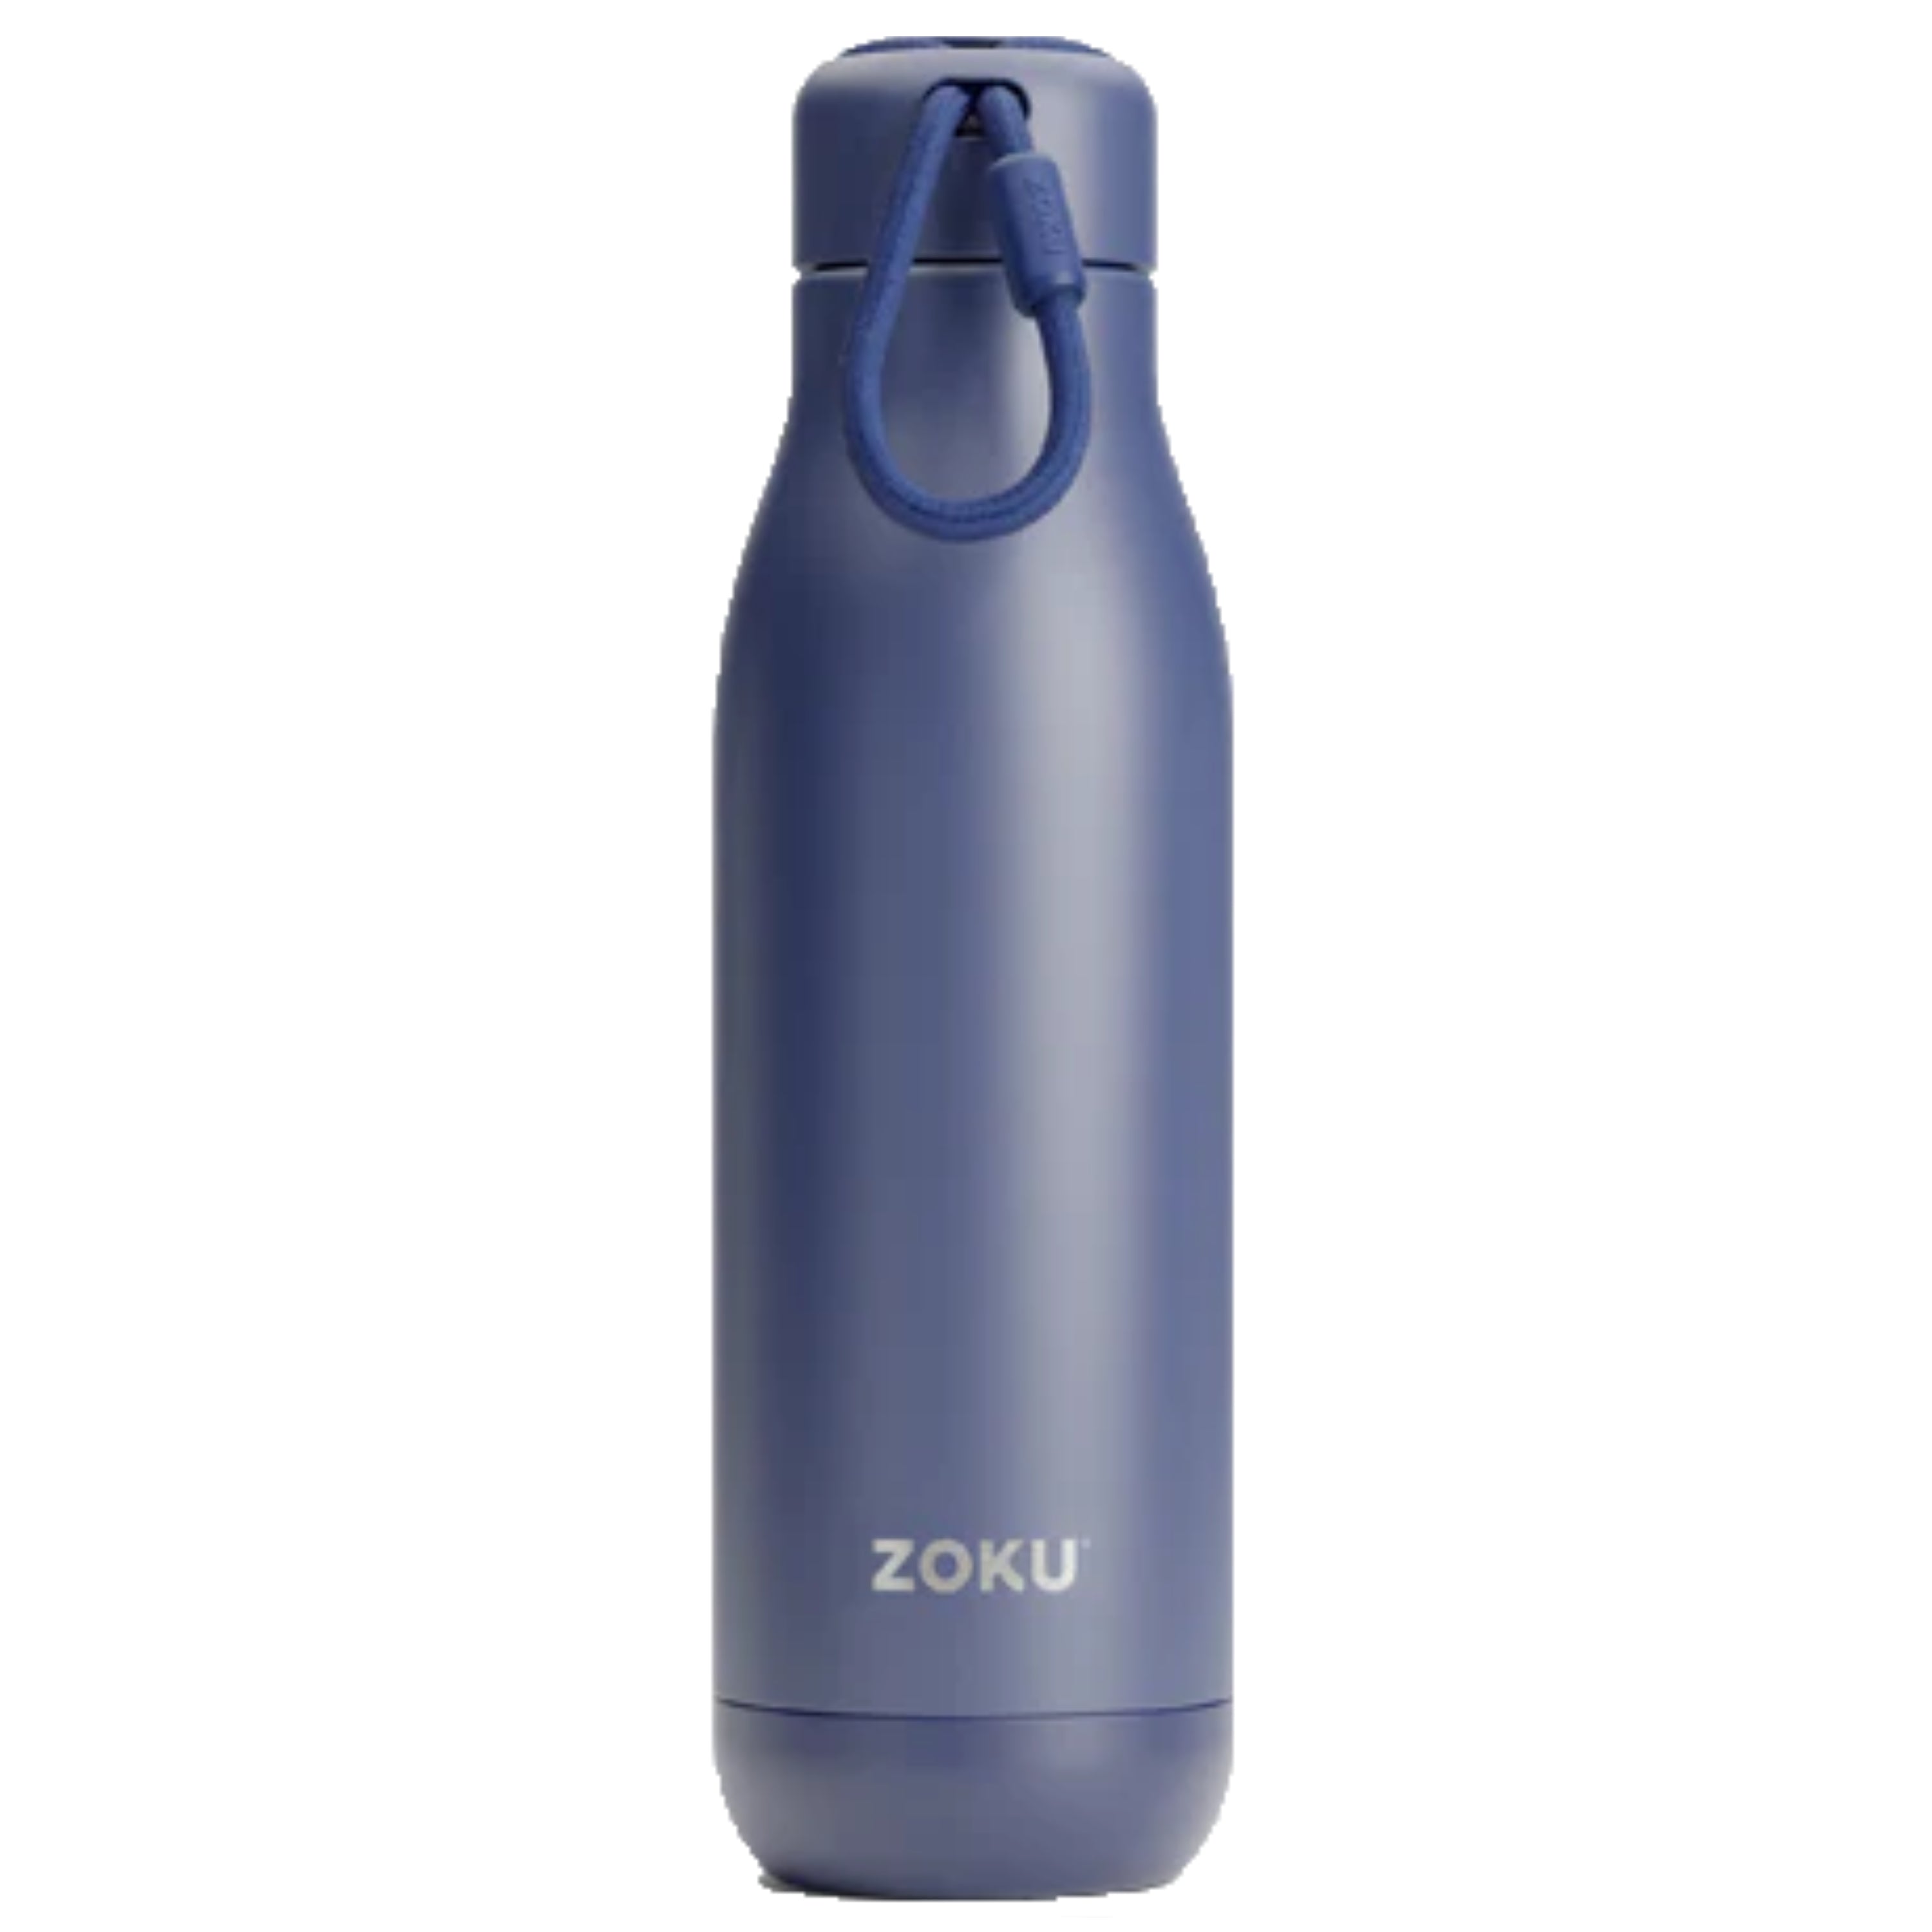 Zoku Stainless Steel Powder Coated Bottle - 25oz – Navy